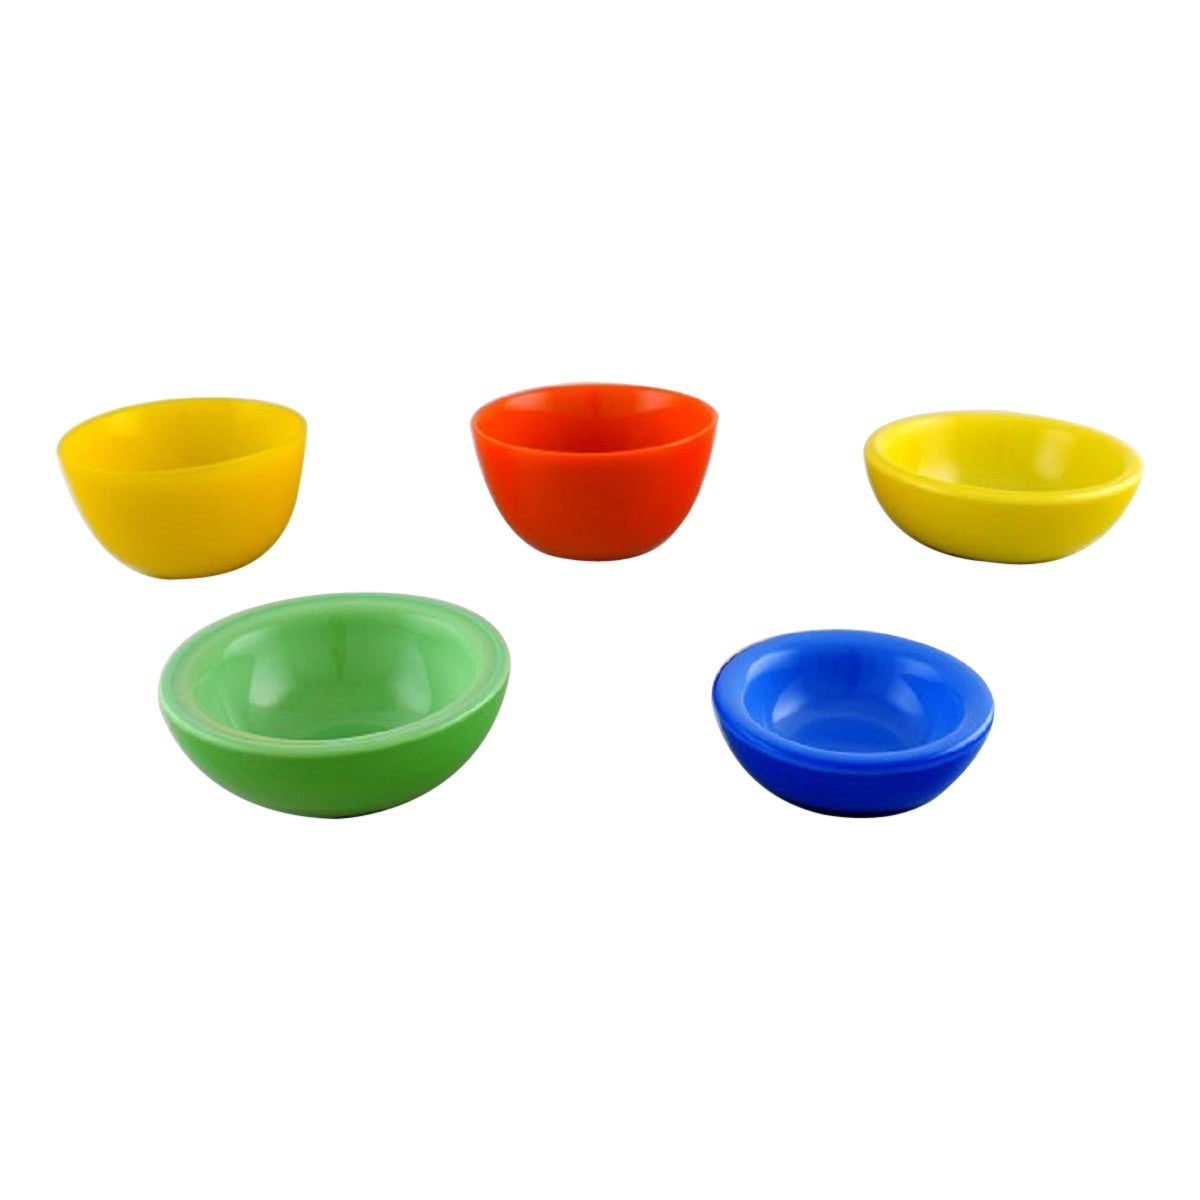 Sven Palmqvist for Orrefors, Set of 5 "Colora" Bowls in Art Glass